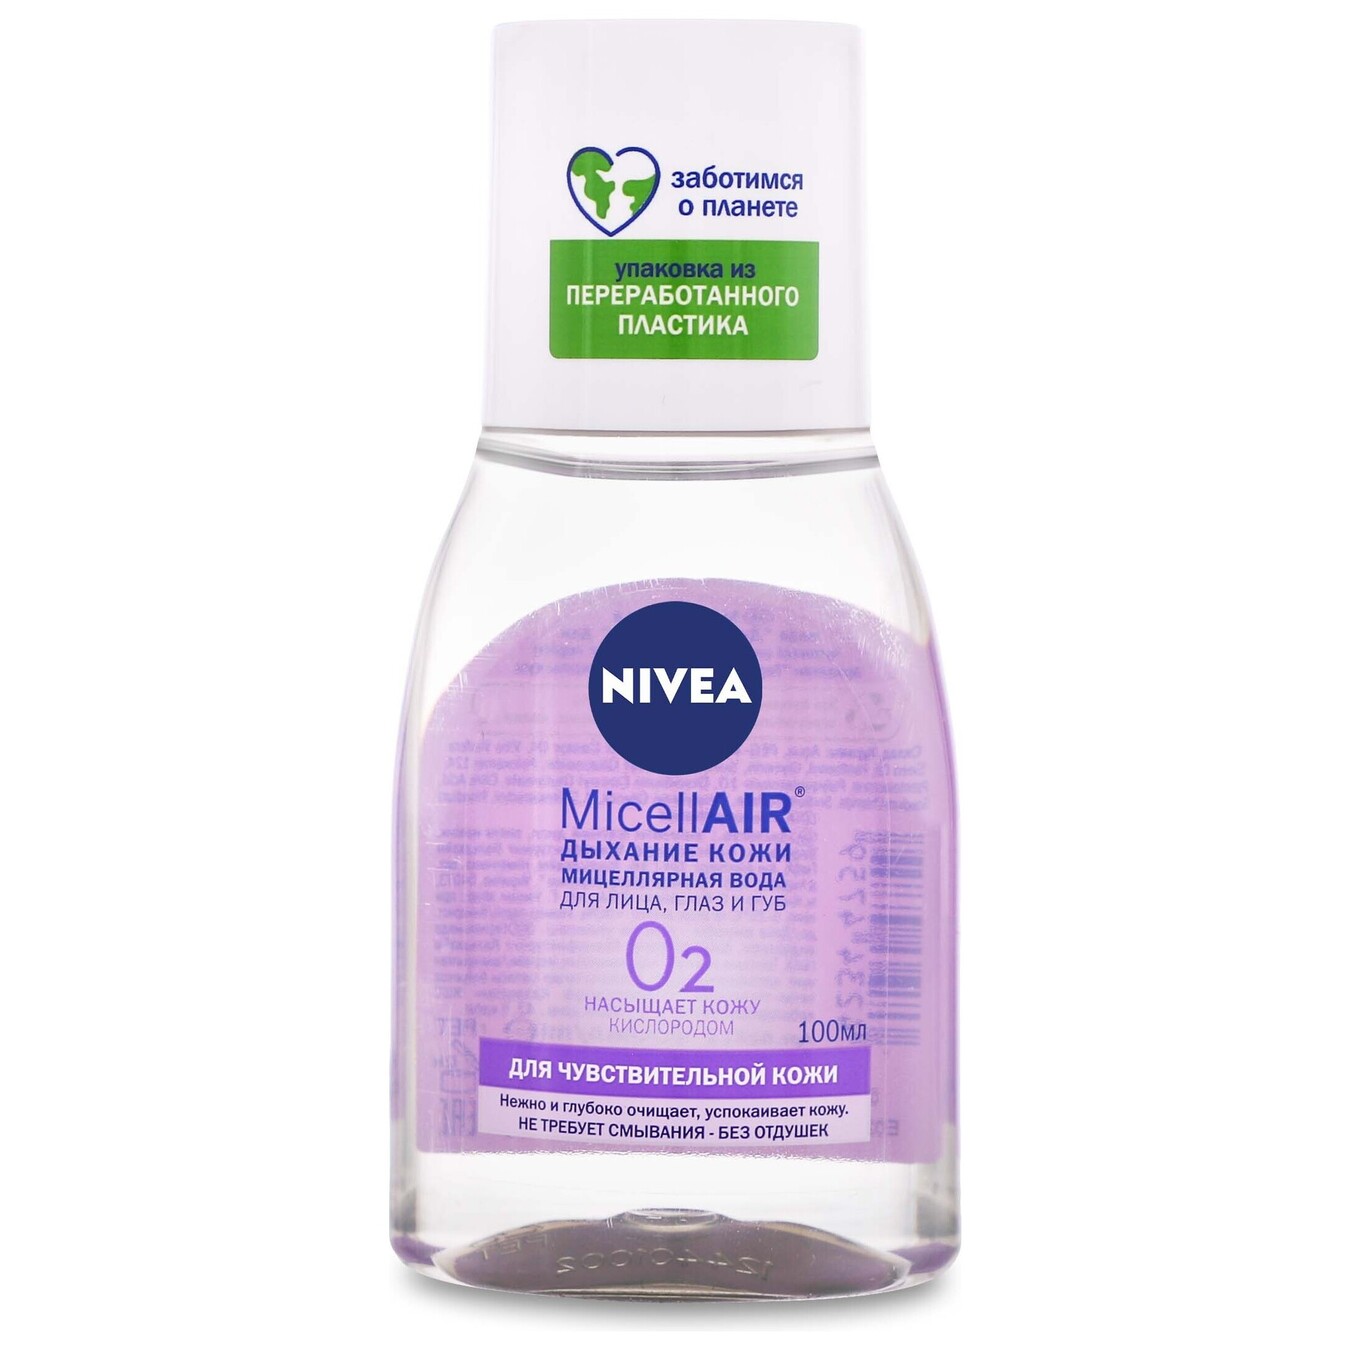 Micellar water Nivea MicellAIR for sensitive skin 100ml